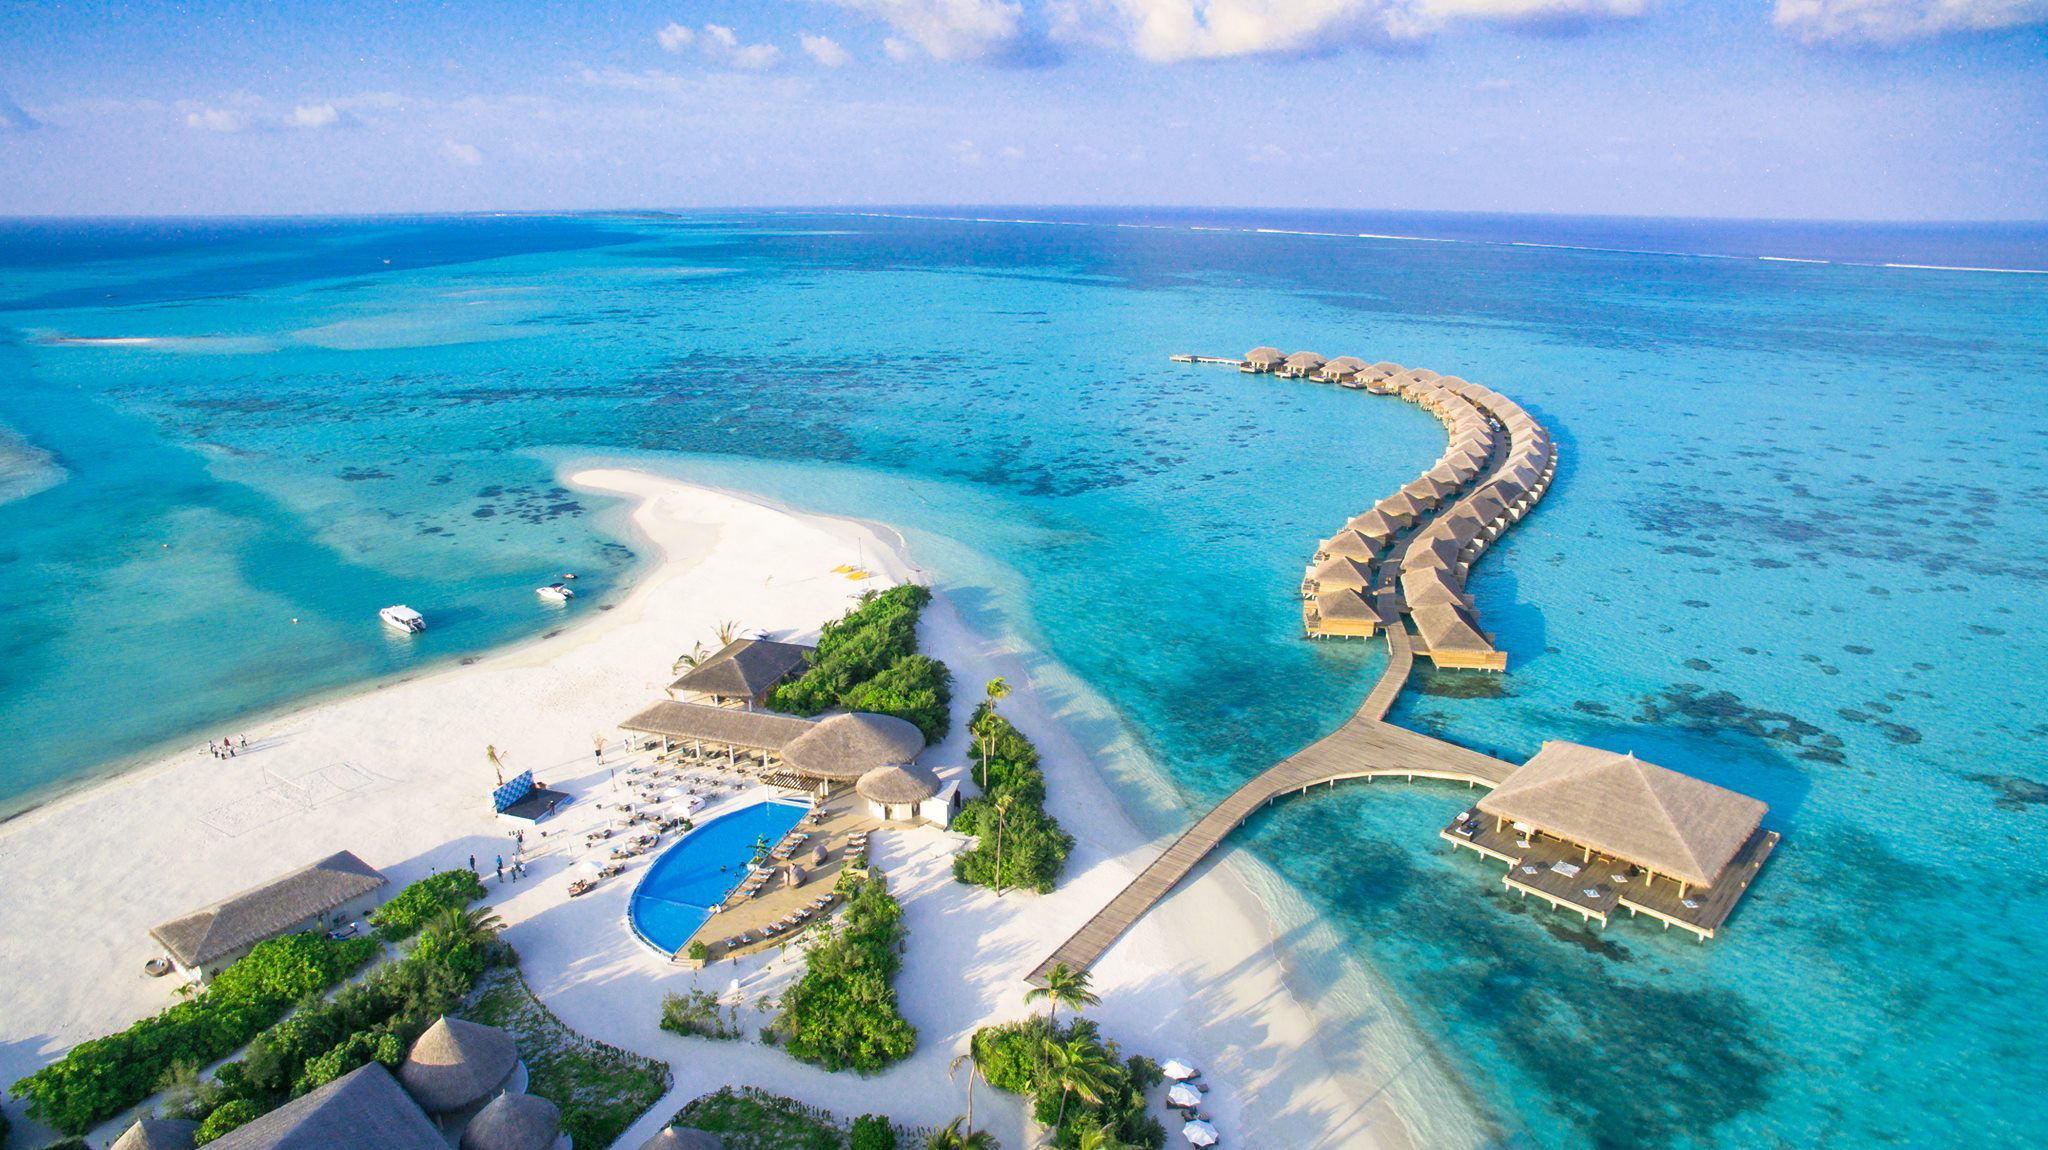 Cocoon Maldives Resort - Ookolhufinolhu, Lhaviyani Atoll, Maldives- Resort Aerial View